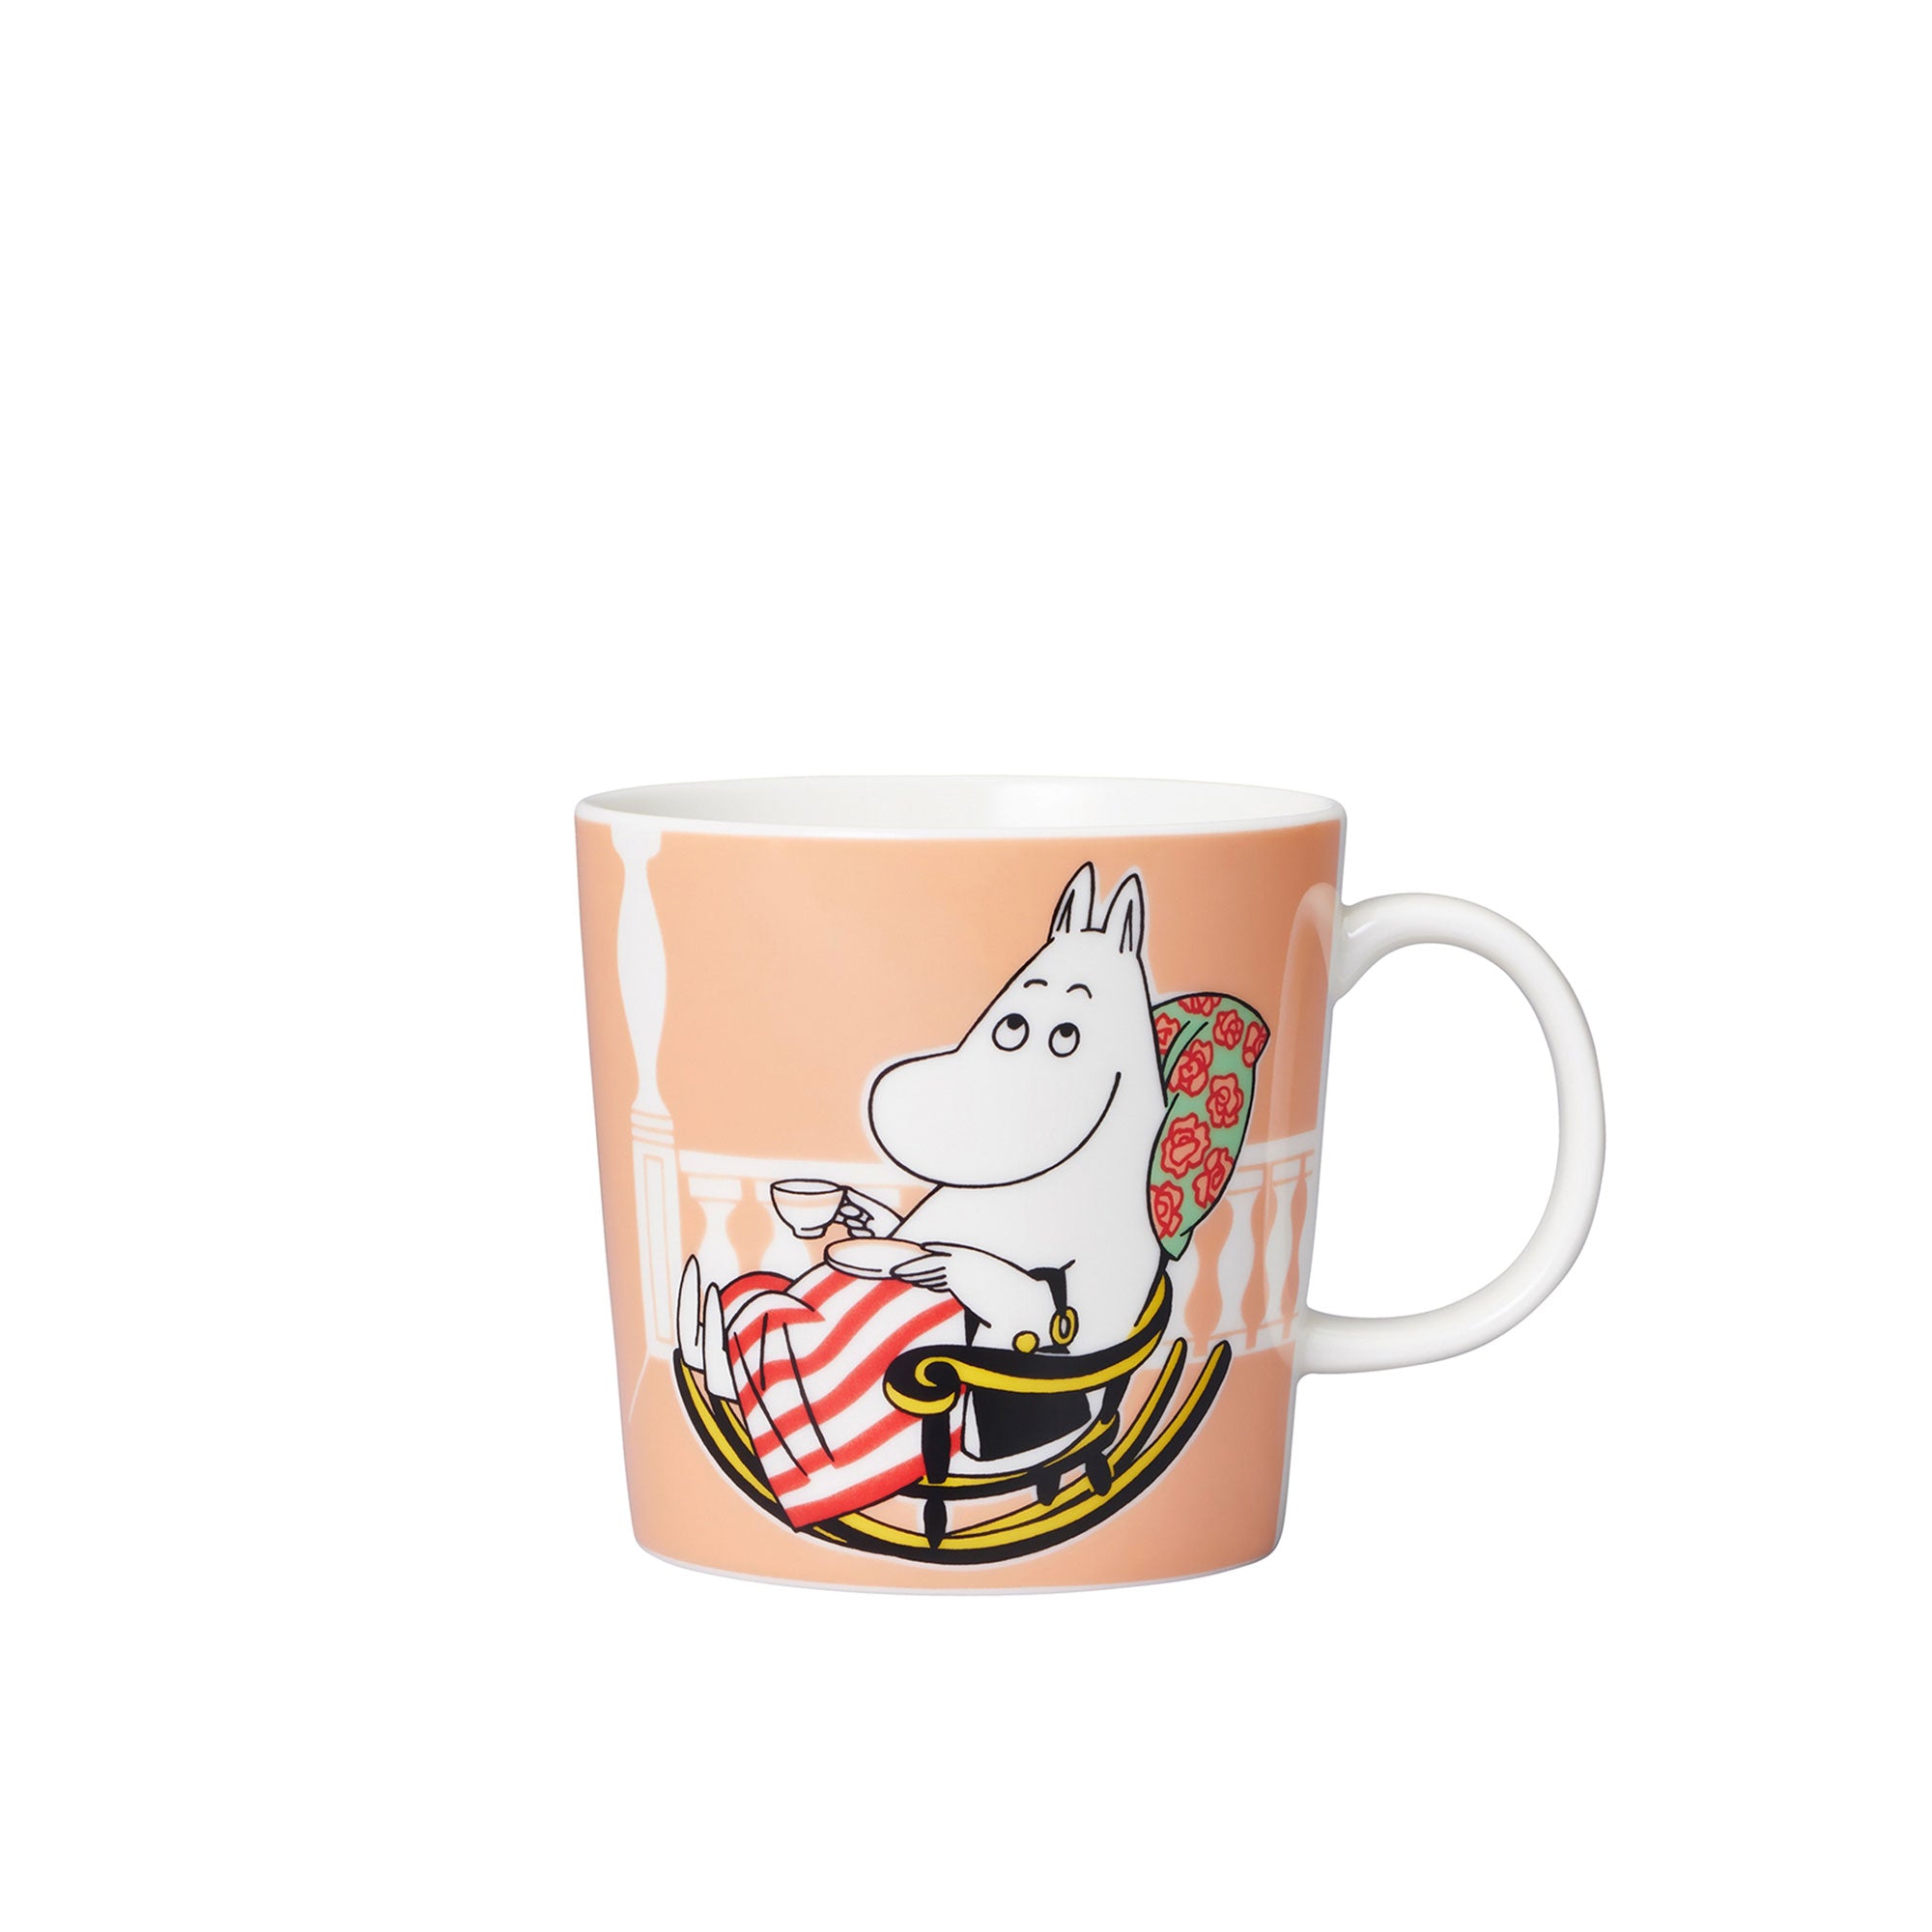 Moomin Mug 10oz Love by Moomin by Arabia